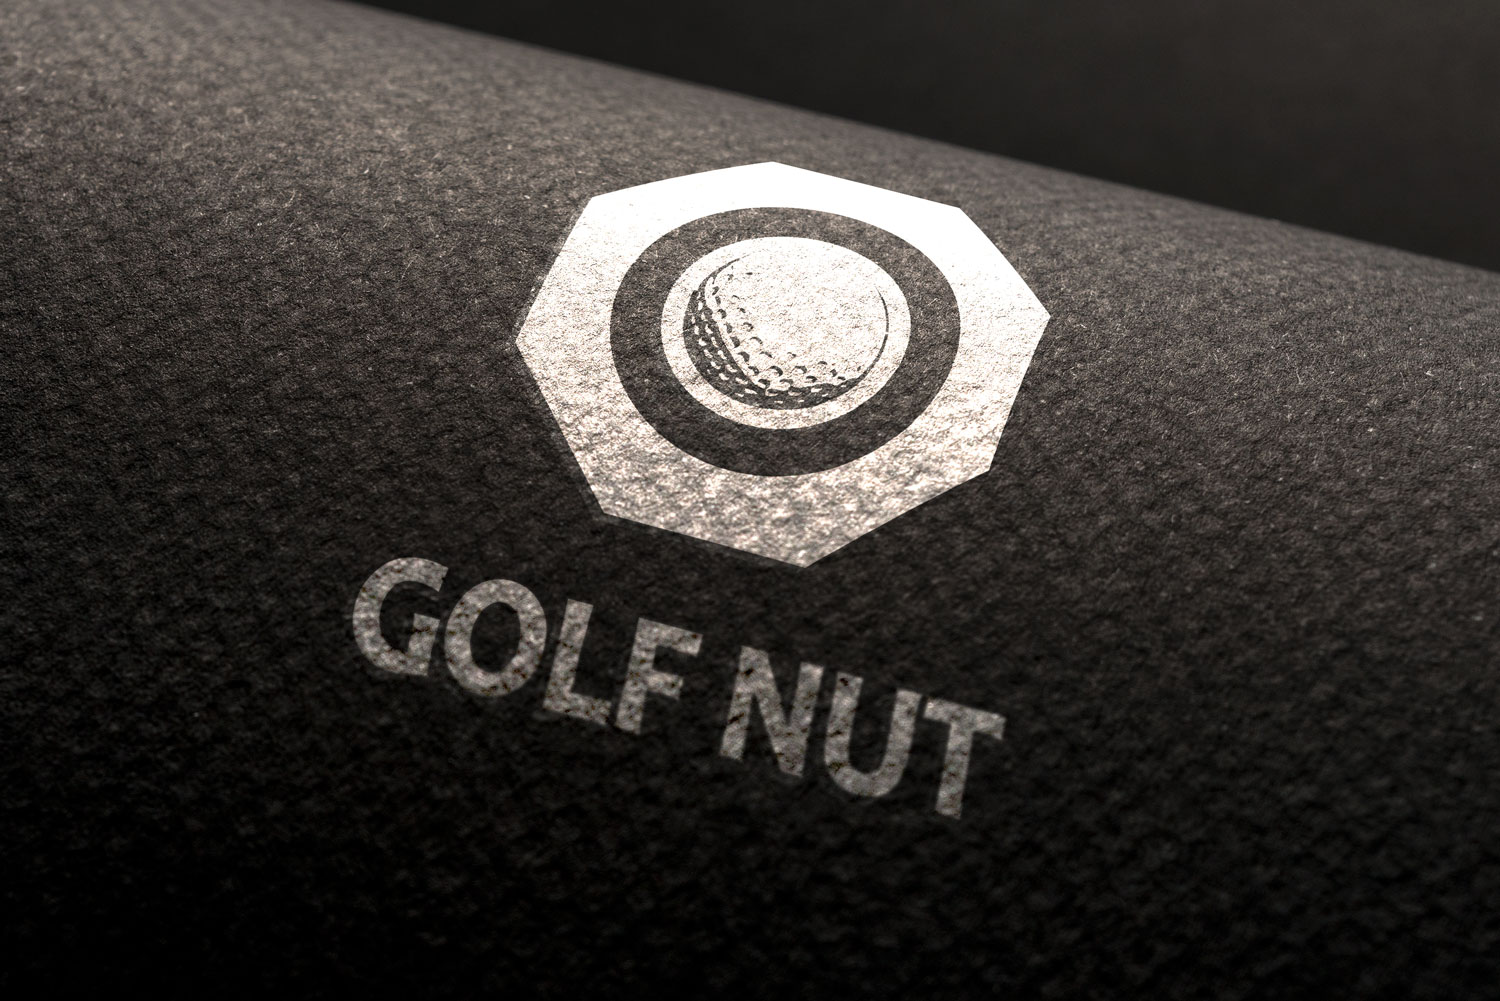 Logo Mockup - Golf Nut